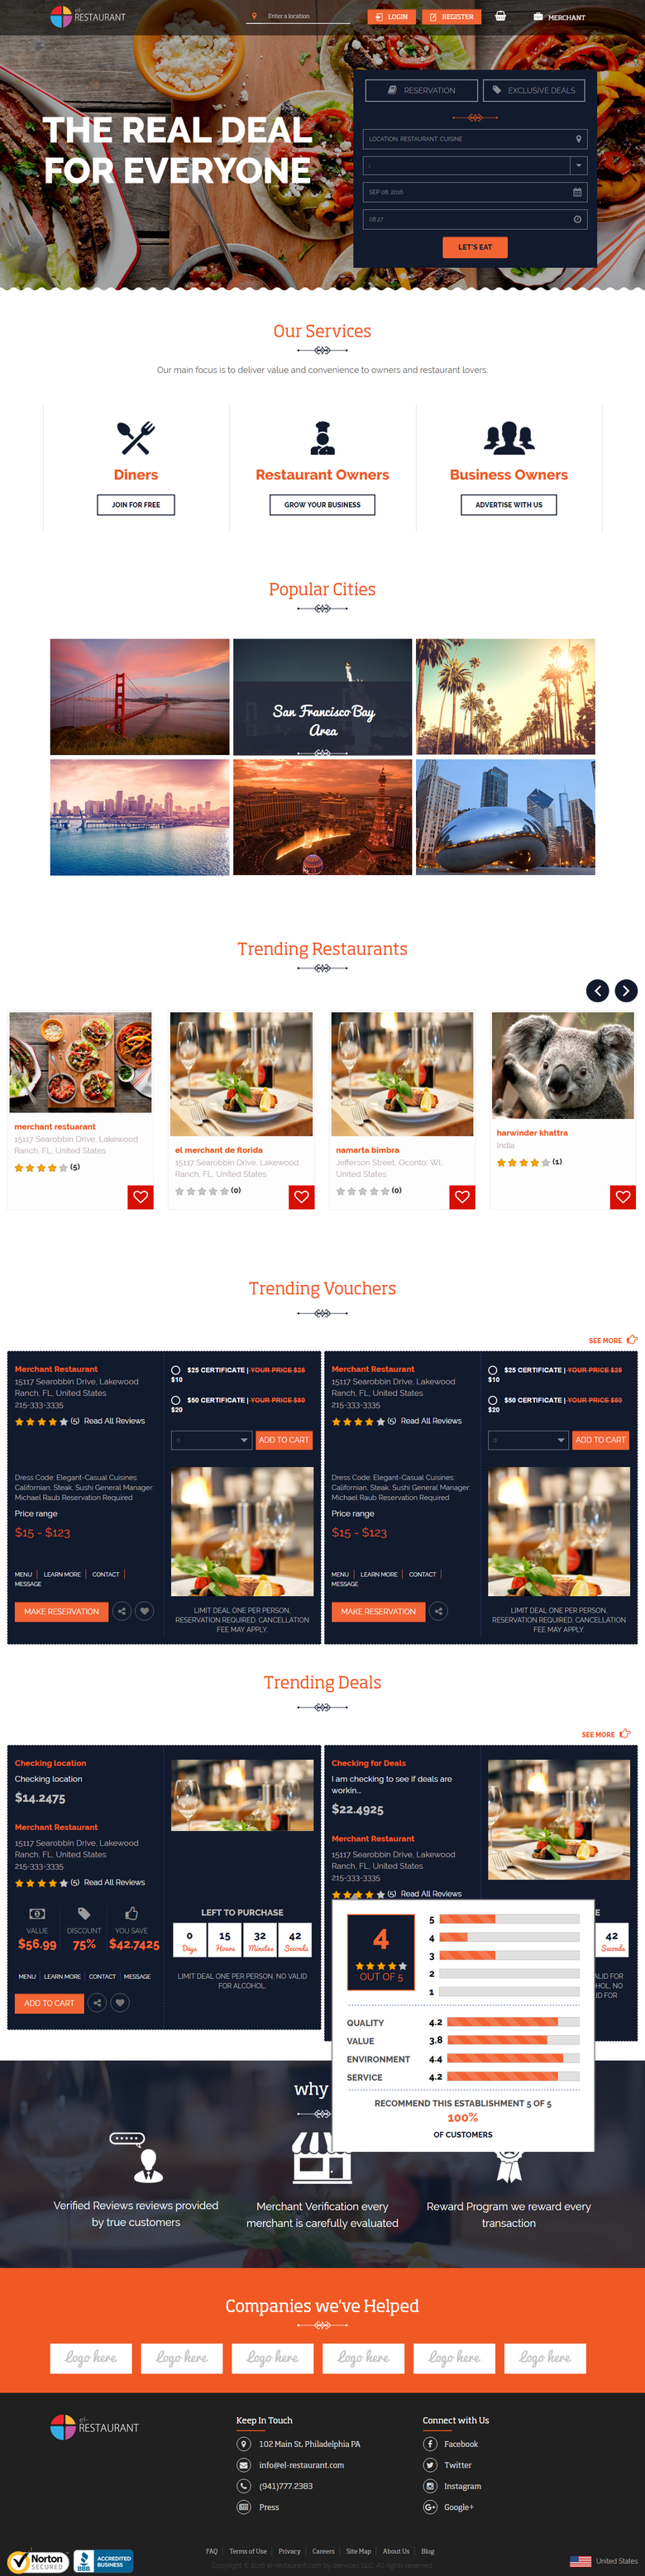 Restaurants | Restaurant Deals | Online Restaurant